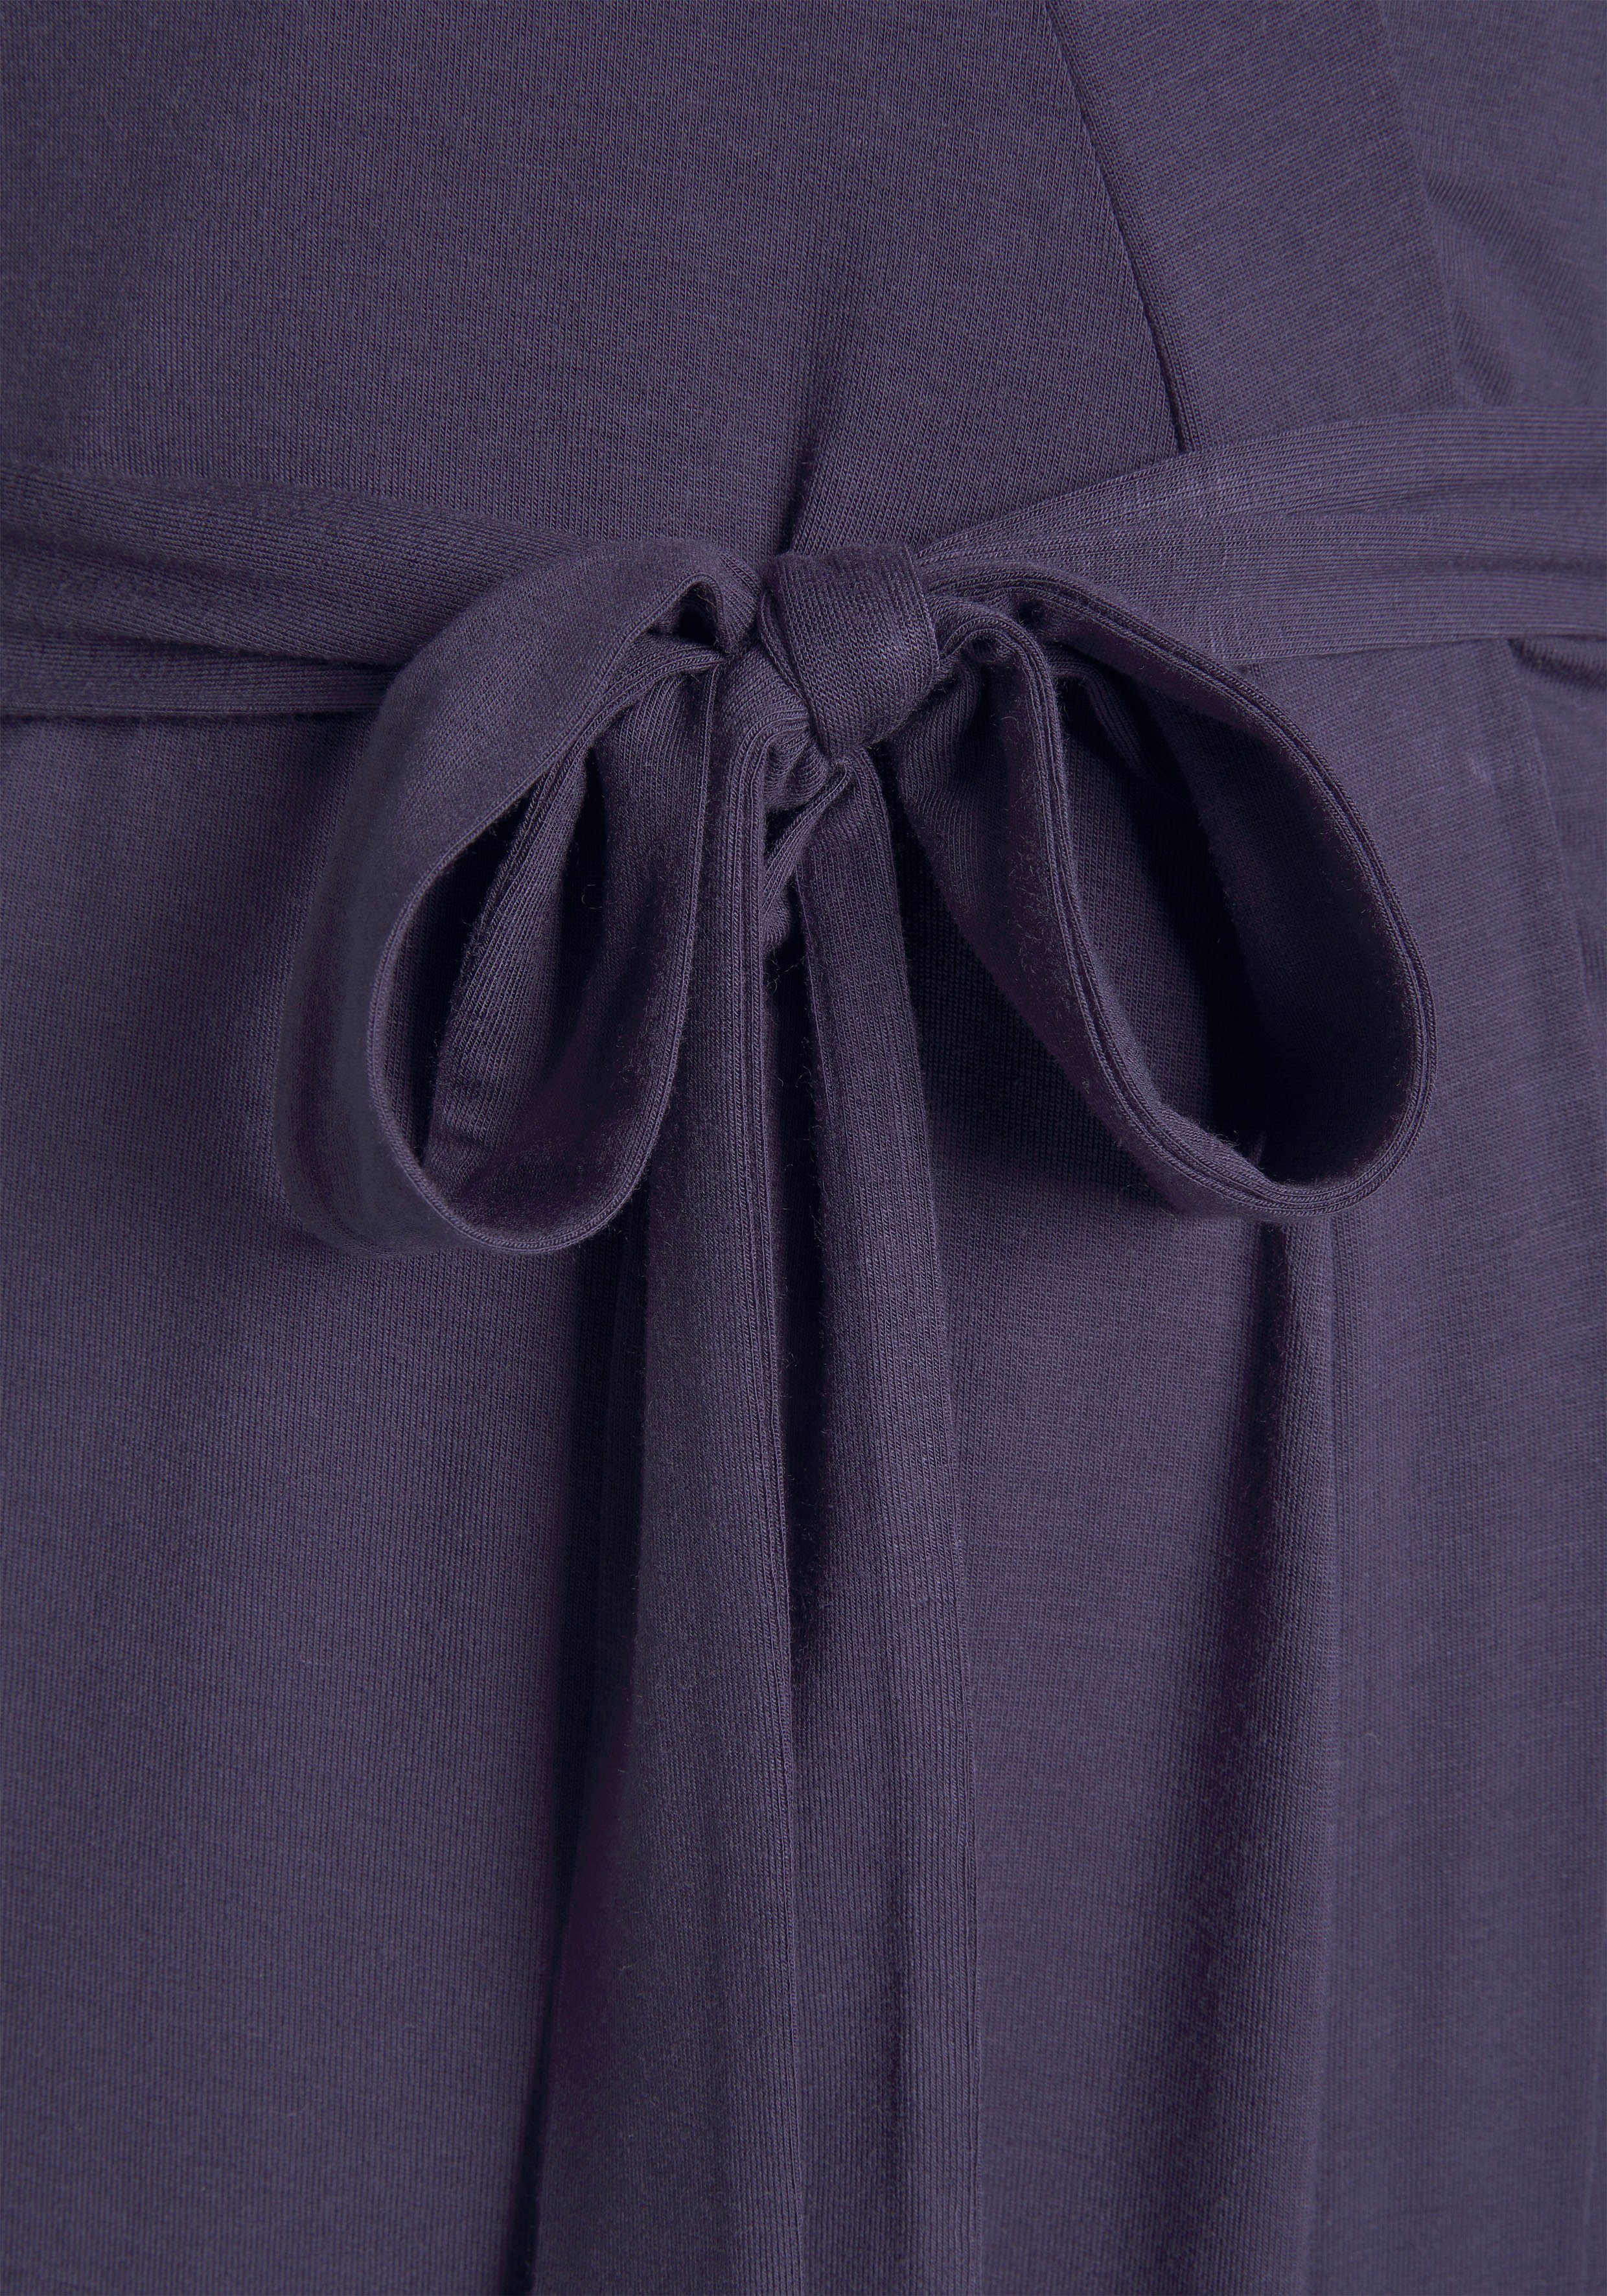 Kimono-Kragen, mit LASCANA Kurzform, Kimono, Single-Jersey, Spitzendetails Gürtel,